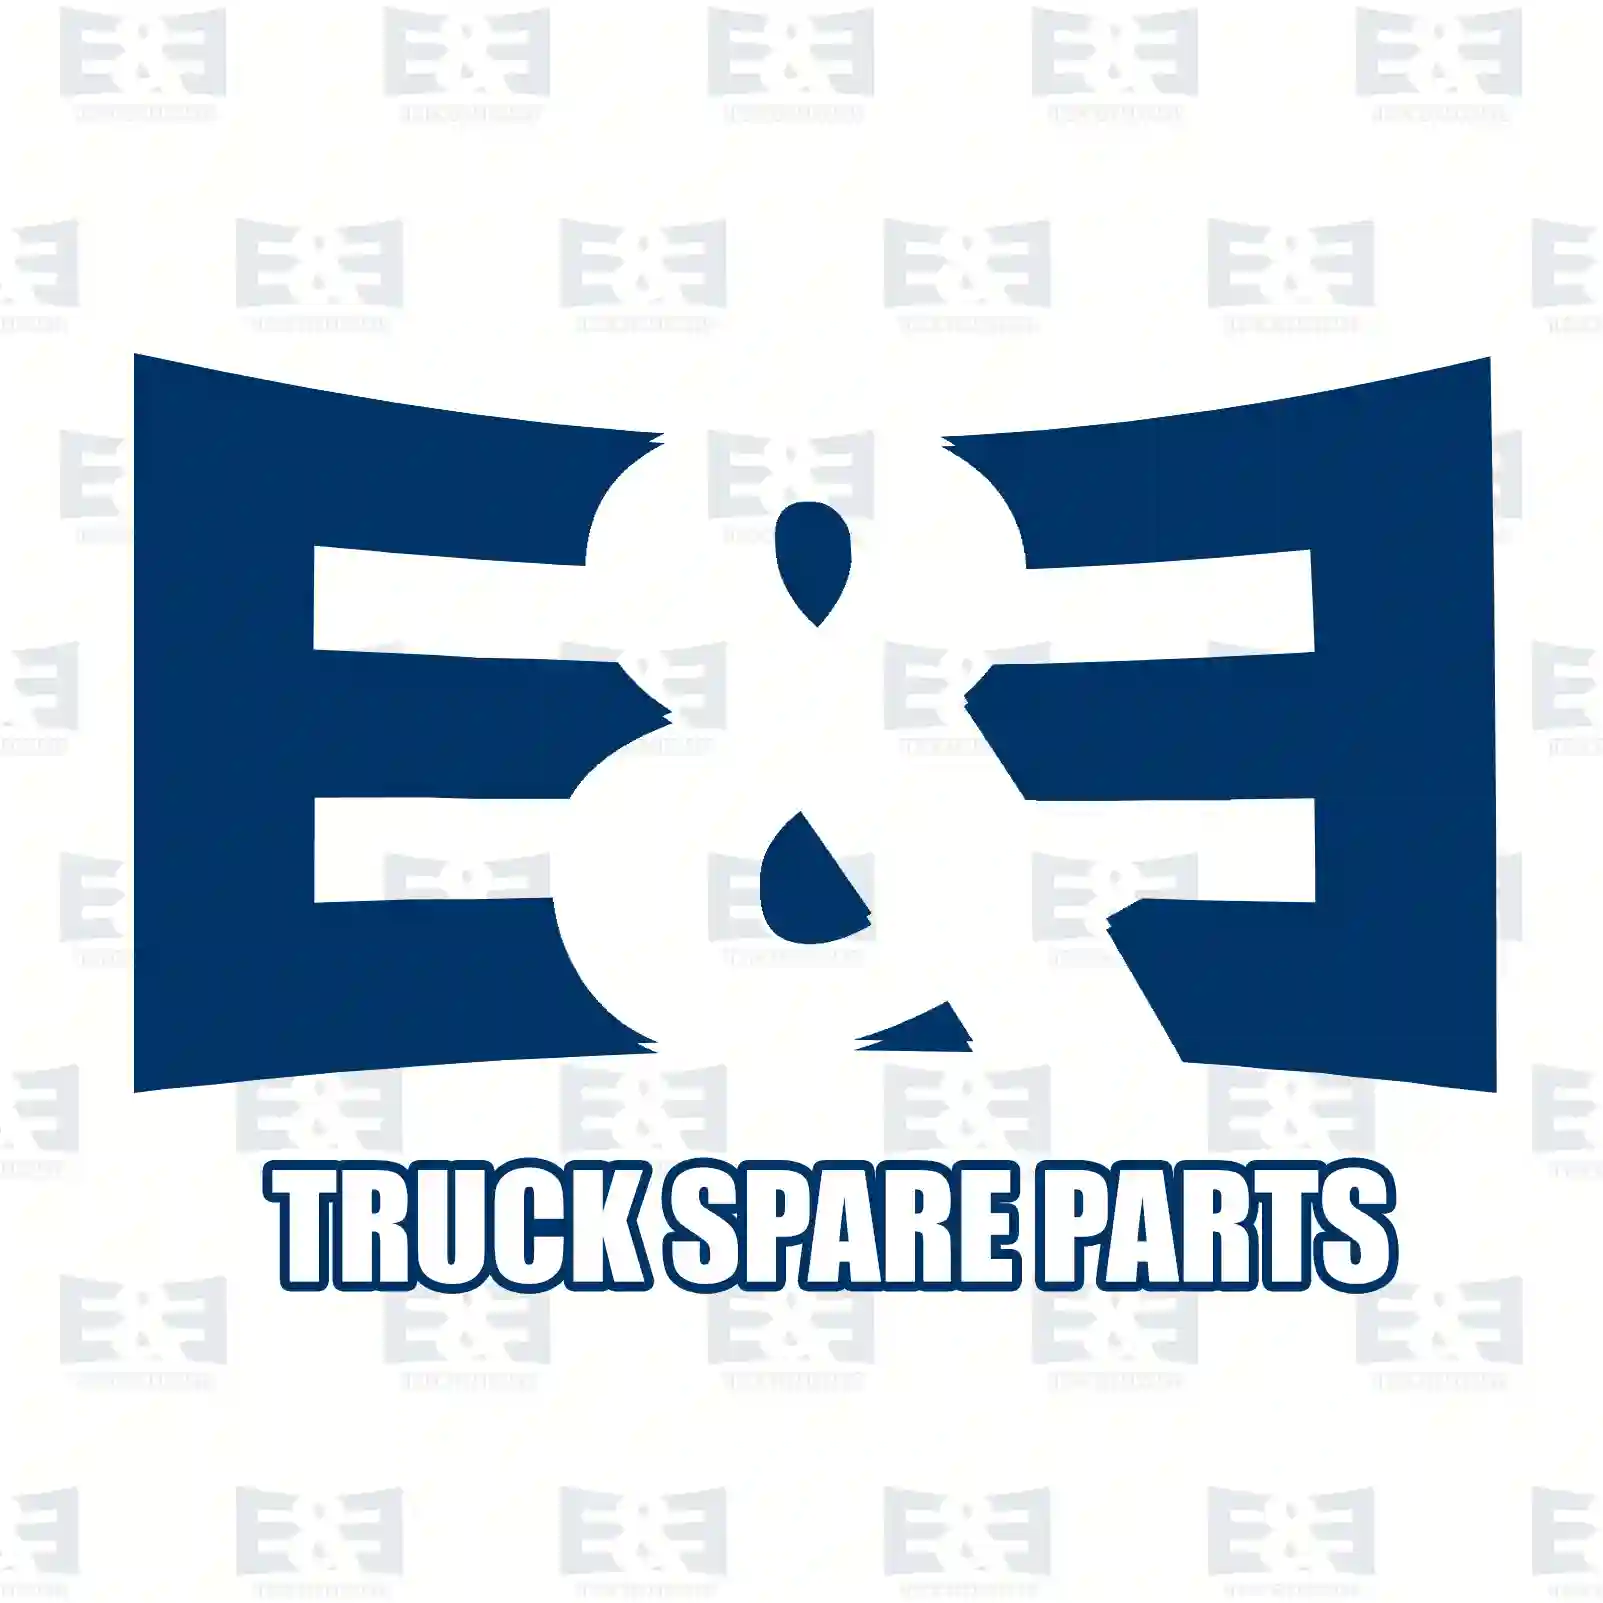 Socket bulb, 2E2298629, 0627256, 1232042, 1331287, 627256, ZG20905-0008 ||  2E2298629 E&E Truck Spare Parts | Truck Spare Parts, Auotomotive Spare Parts Socket bulb, 2E2298629, 0627256, 1232042, 1331287, 627256, ZG20905-0008 ||  2E2298629 E&E Truck Spare Parts | Truck Spare Parts, Auotomotive Spare Parts